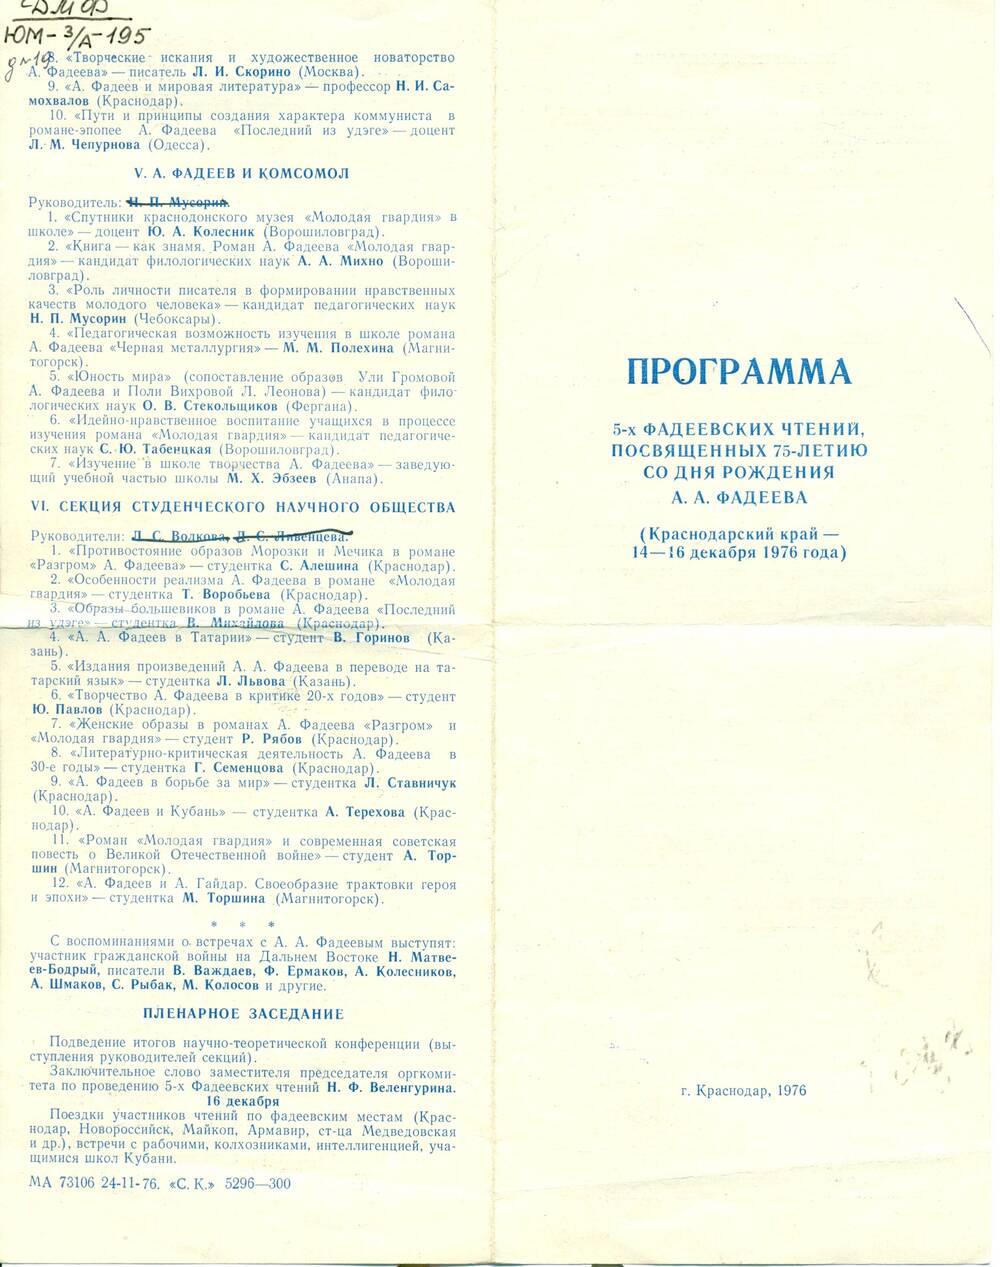 Программа 5 Фадеевских чтений, Краснодар 1976г.